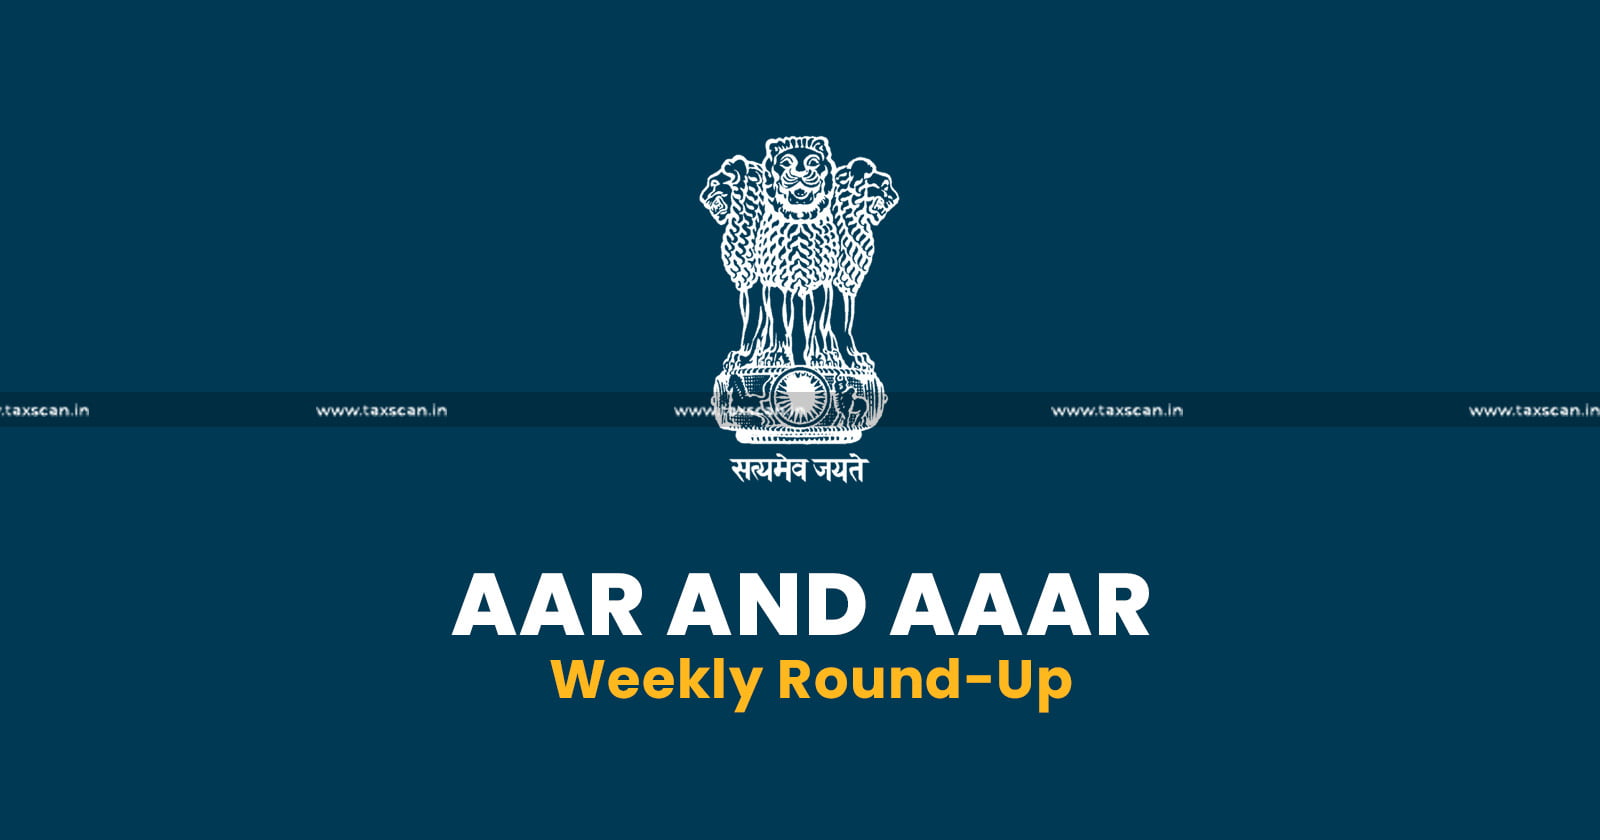 AAR AND AAAR Weekly Round-Up - AAR - AAAR - Weekly Round-Up - Round-Up - Taxscan